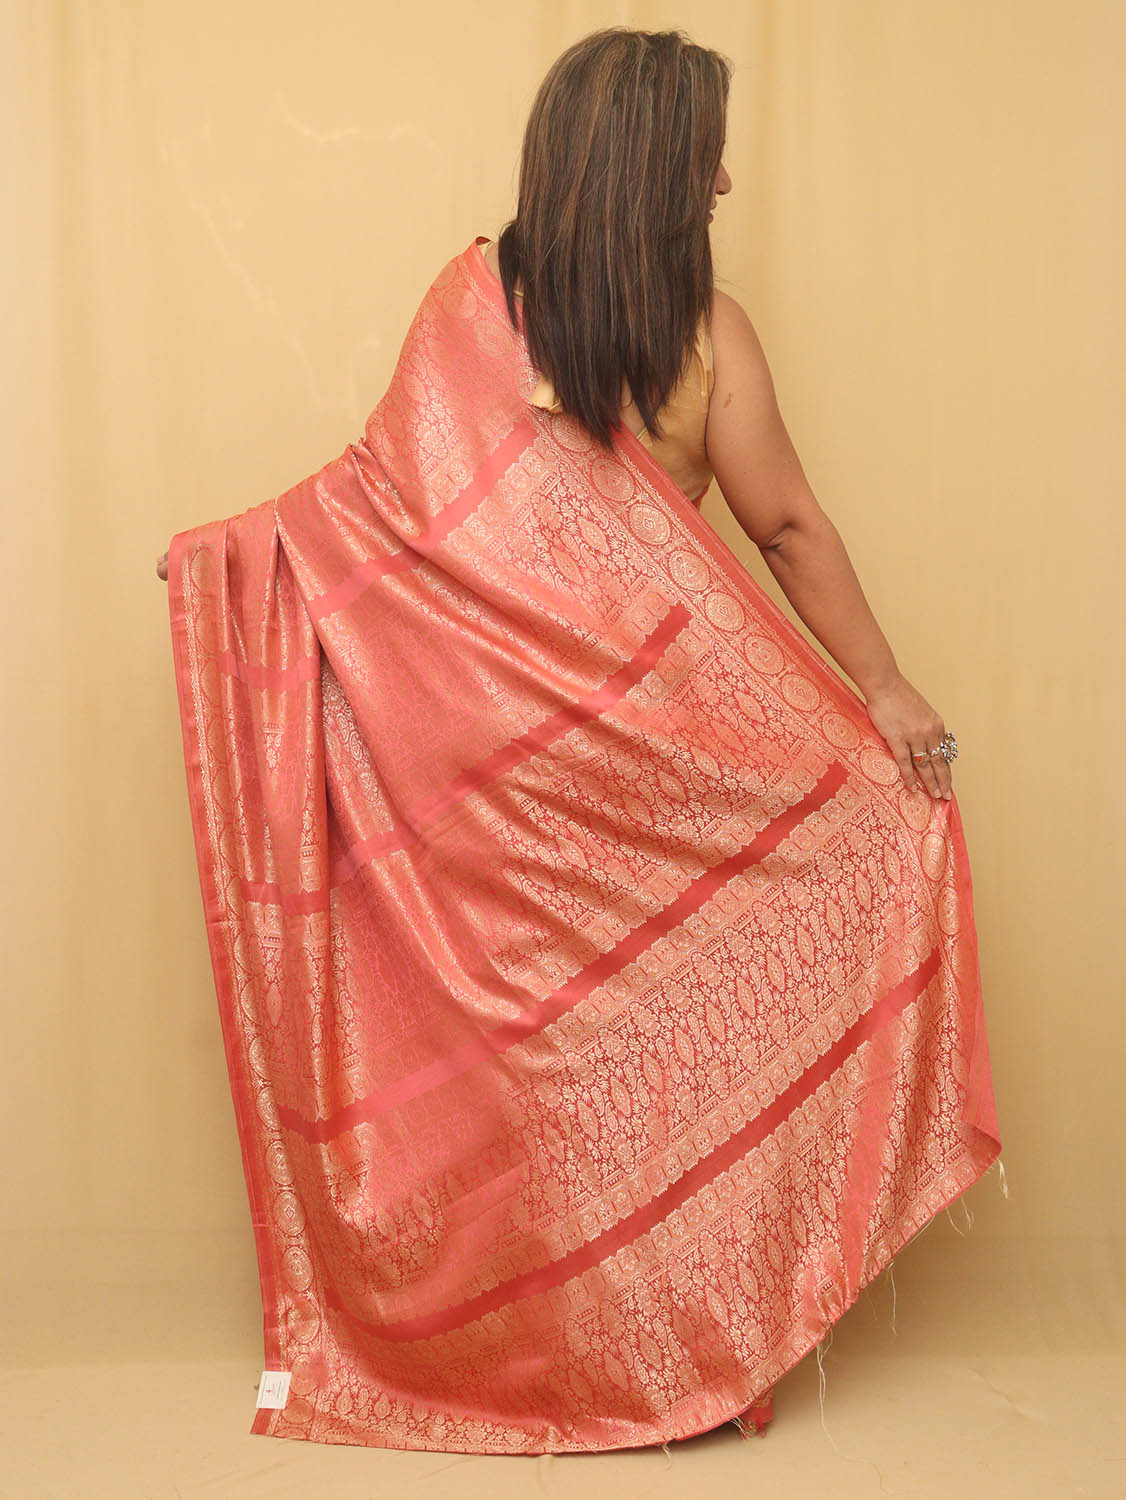 Shop Now for Red Handloom Banarasi Satin Silk Saree - Latest Collection